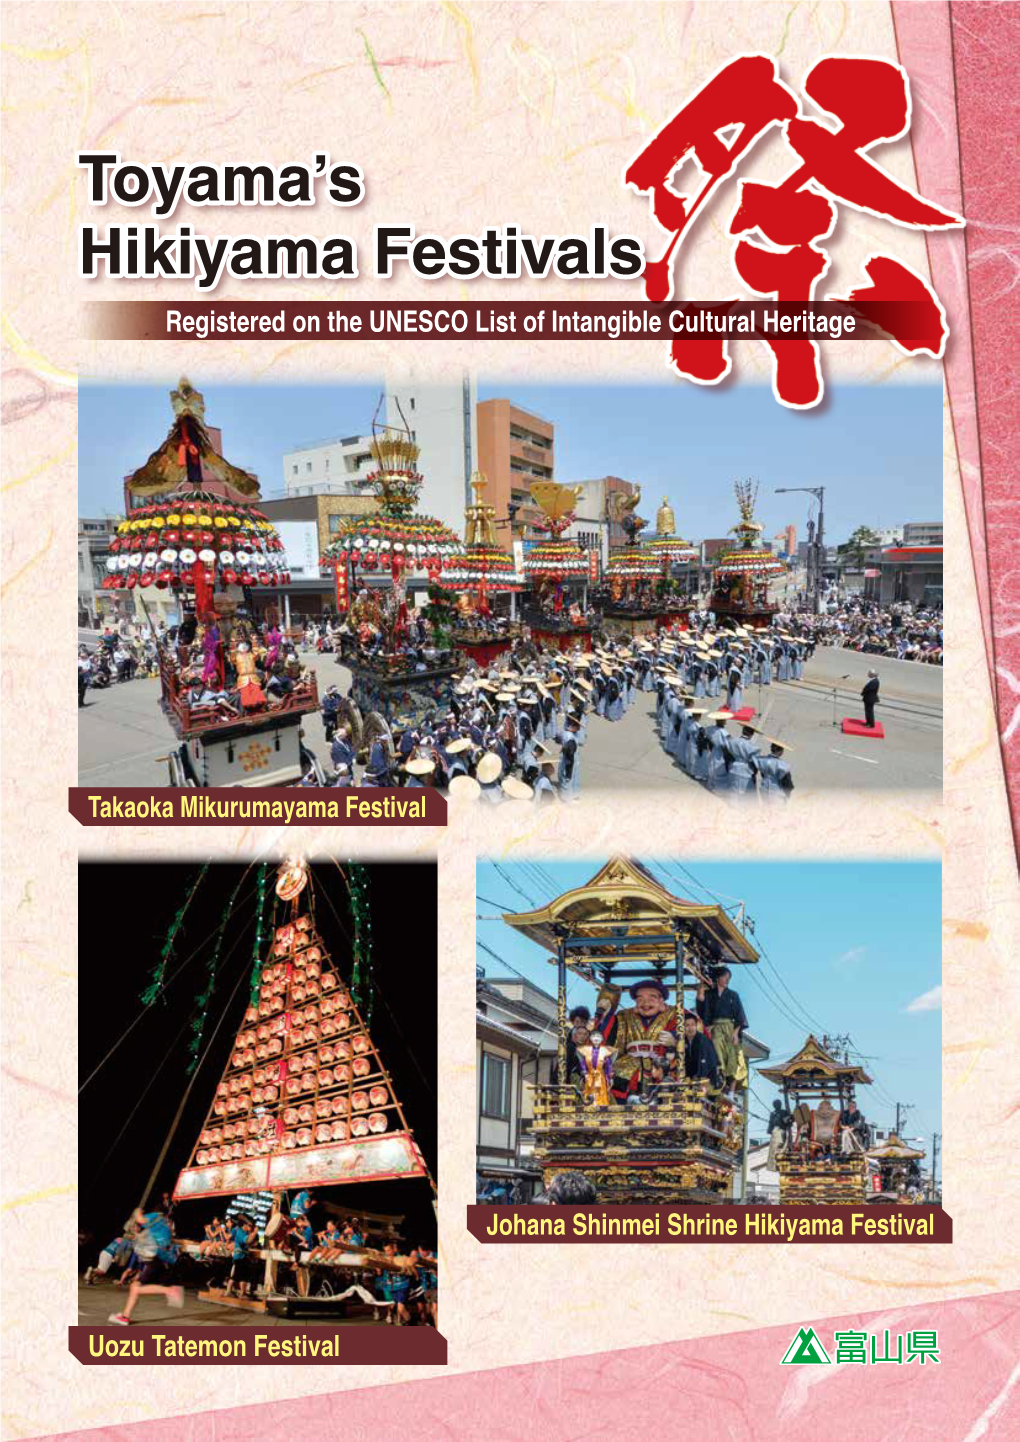 Toyama's Hikiyama Festivals